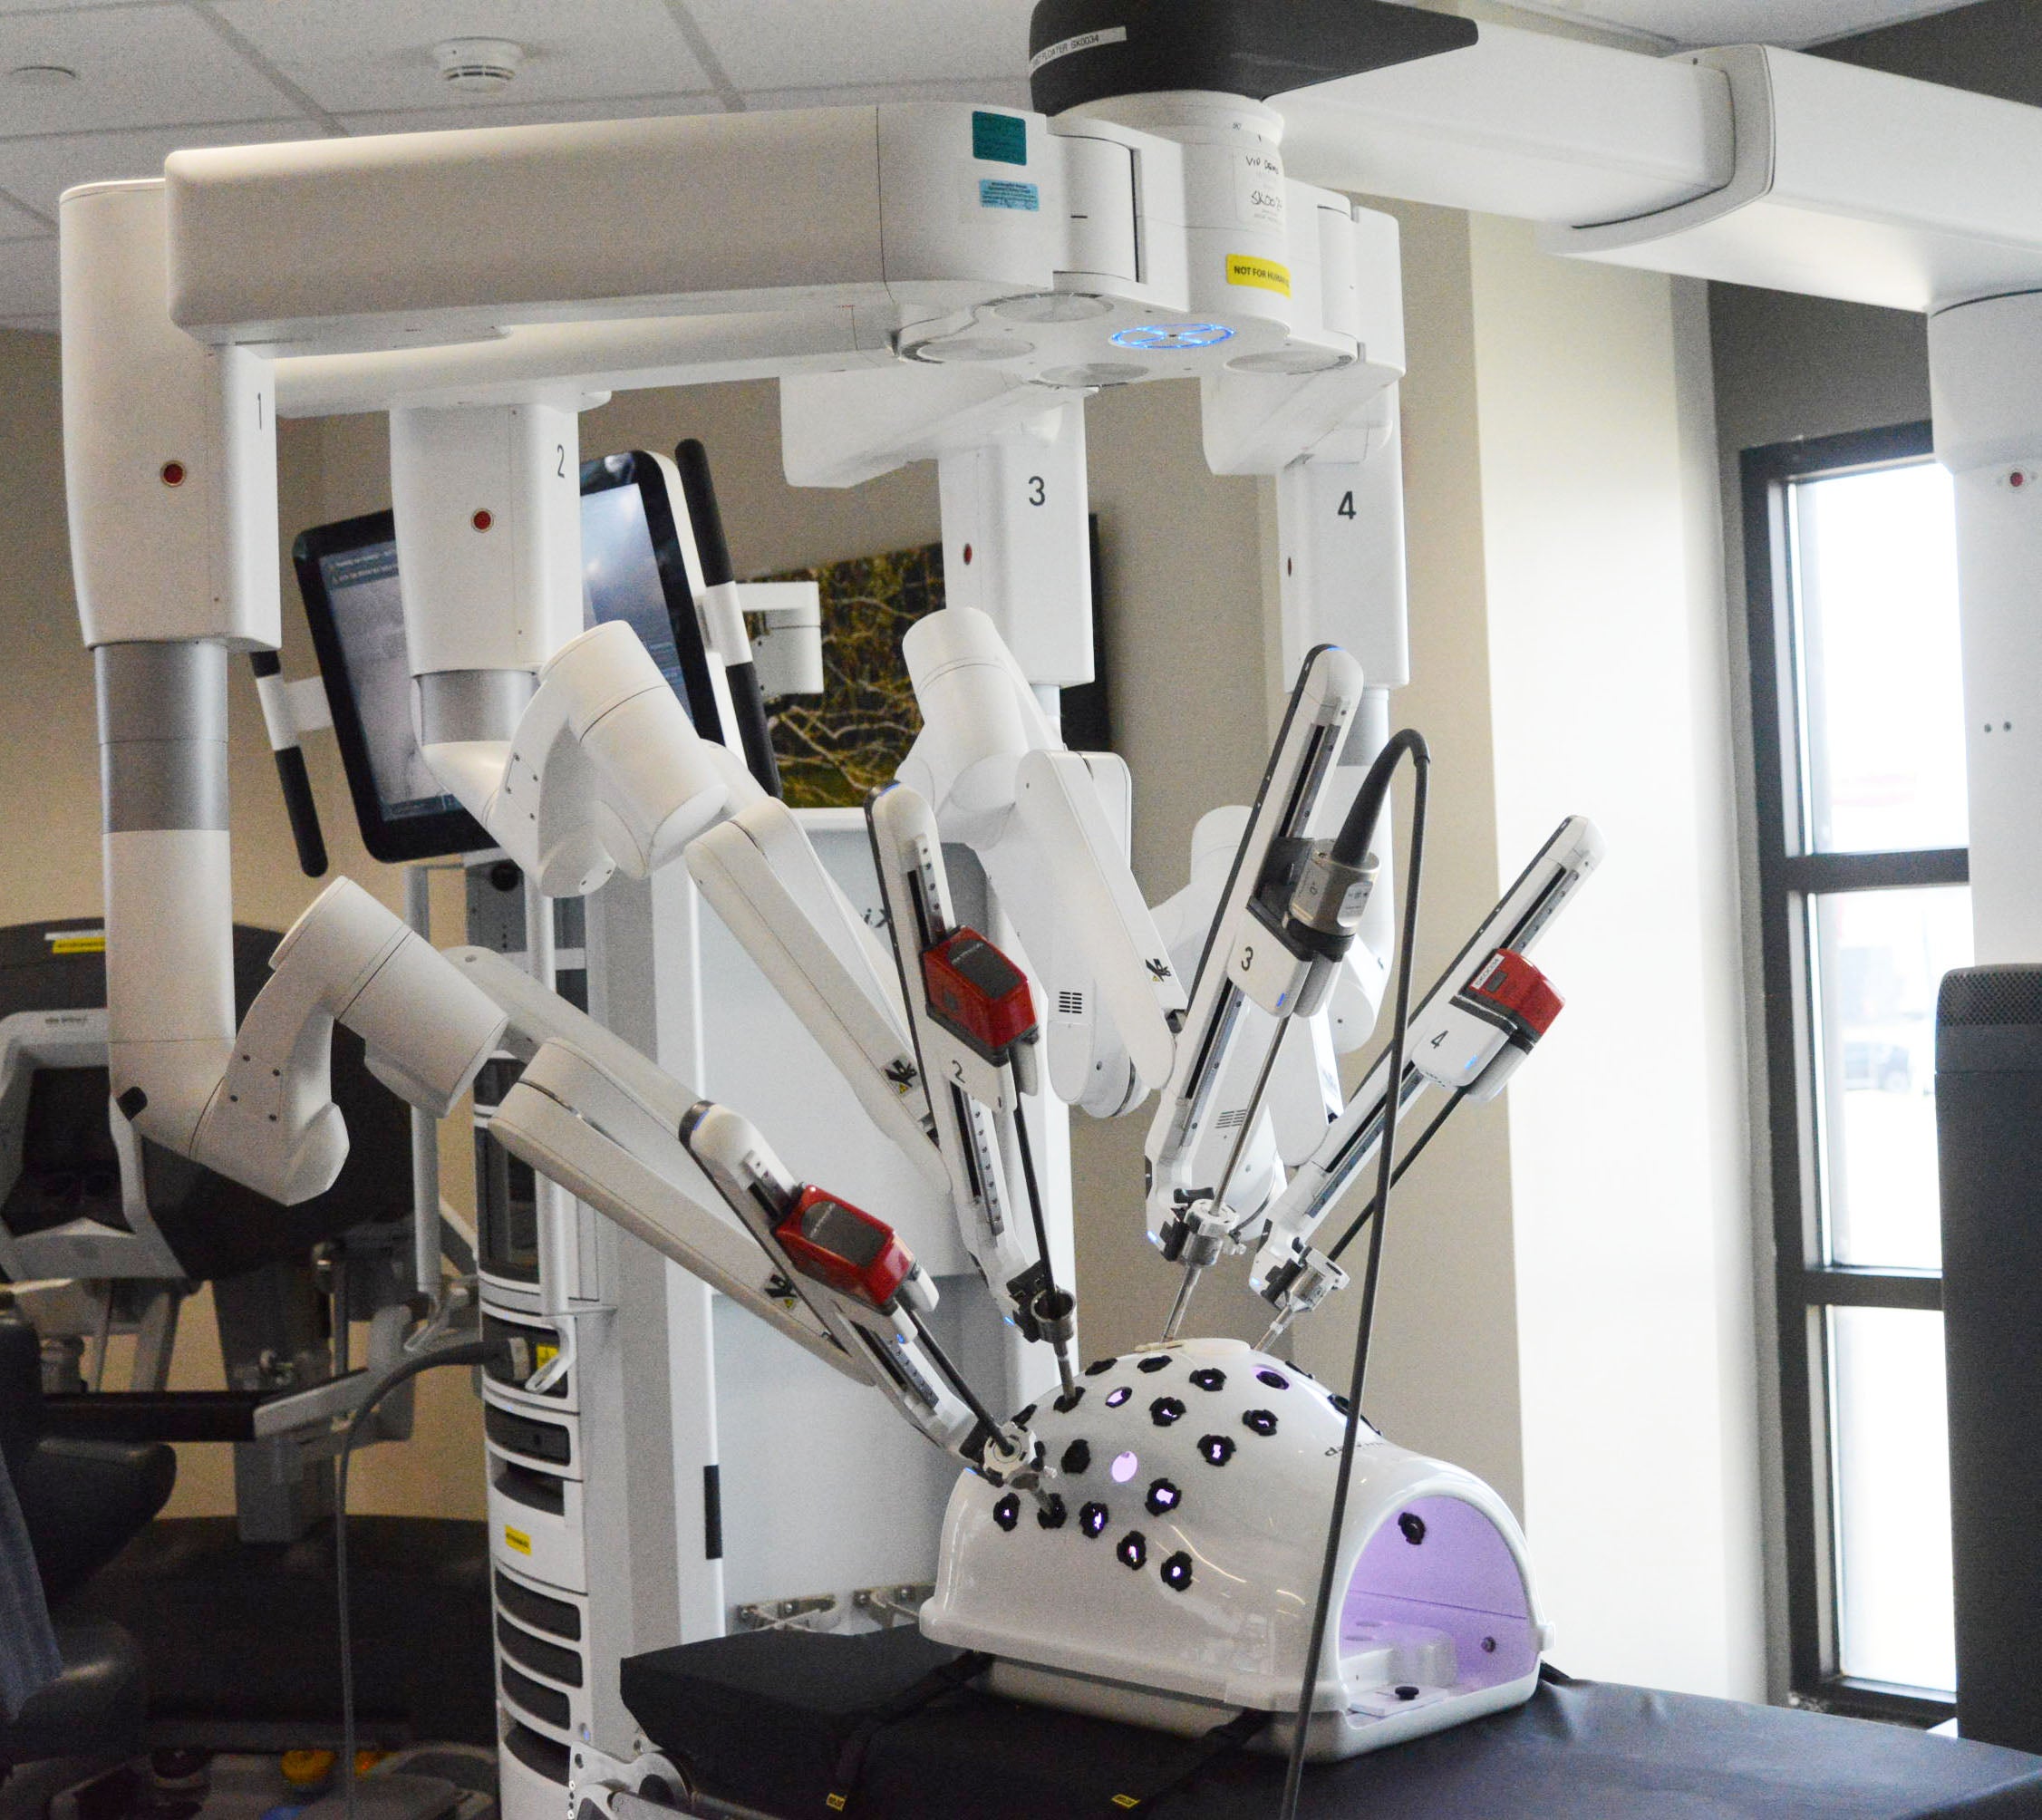 Da Vinci Demonstration: Whitfield Regional demonstrates robotic surgery